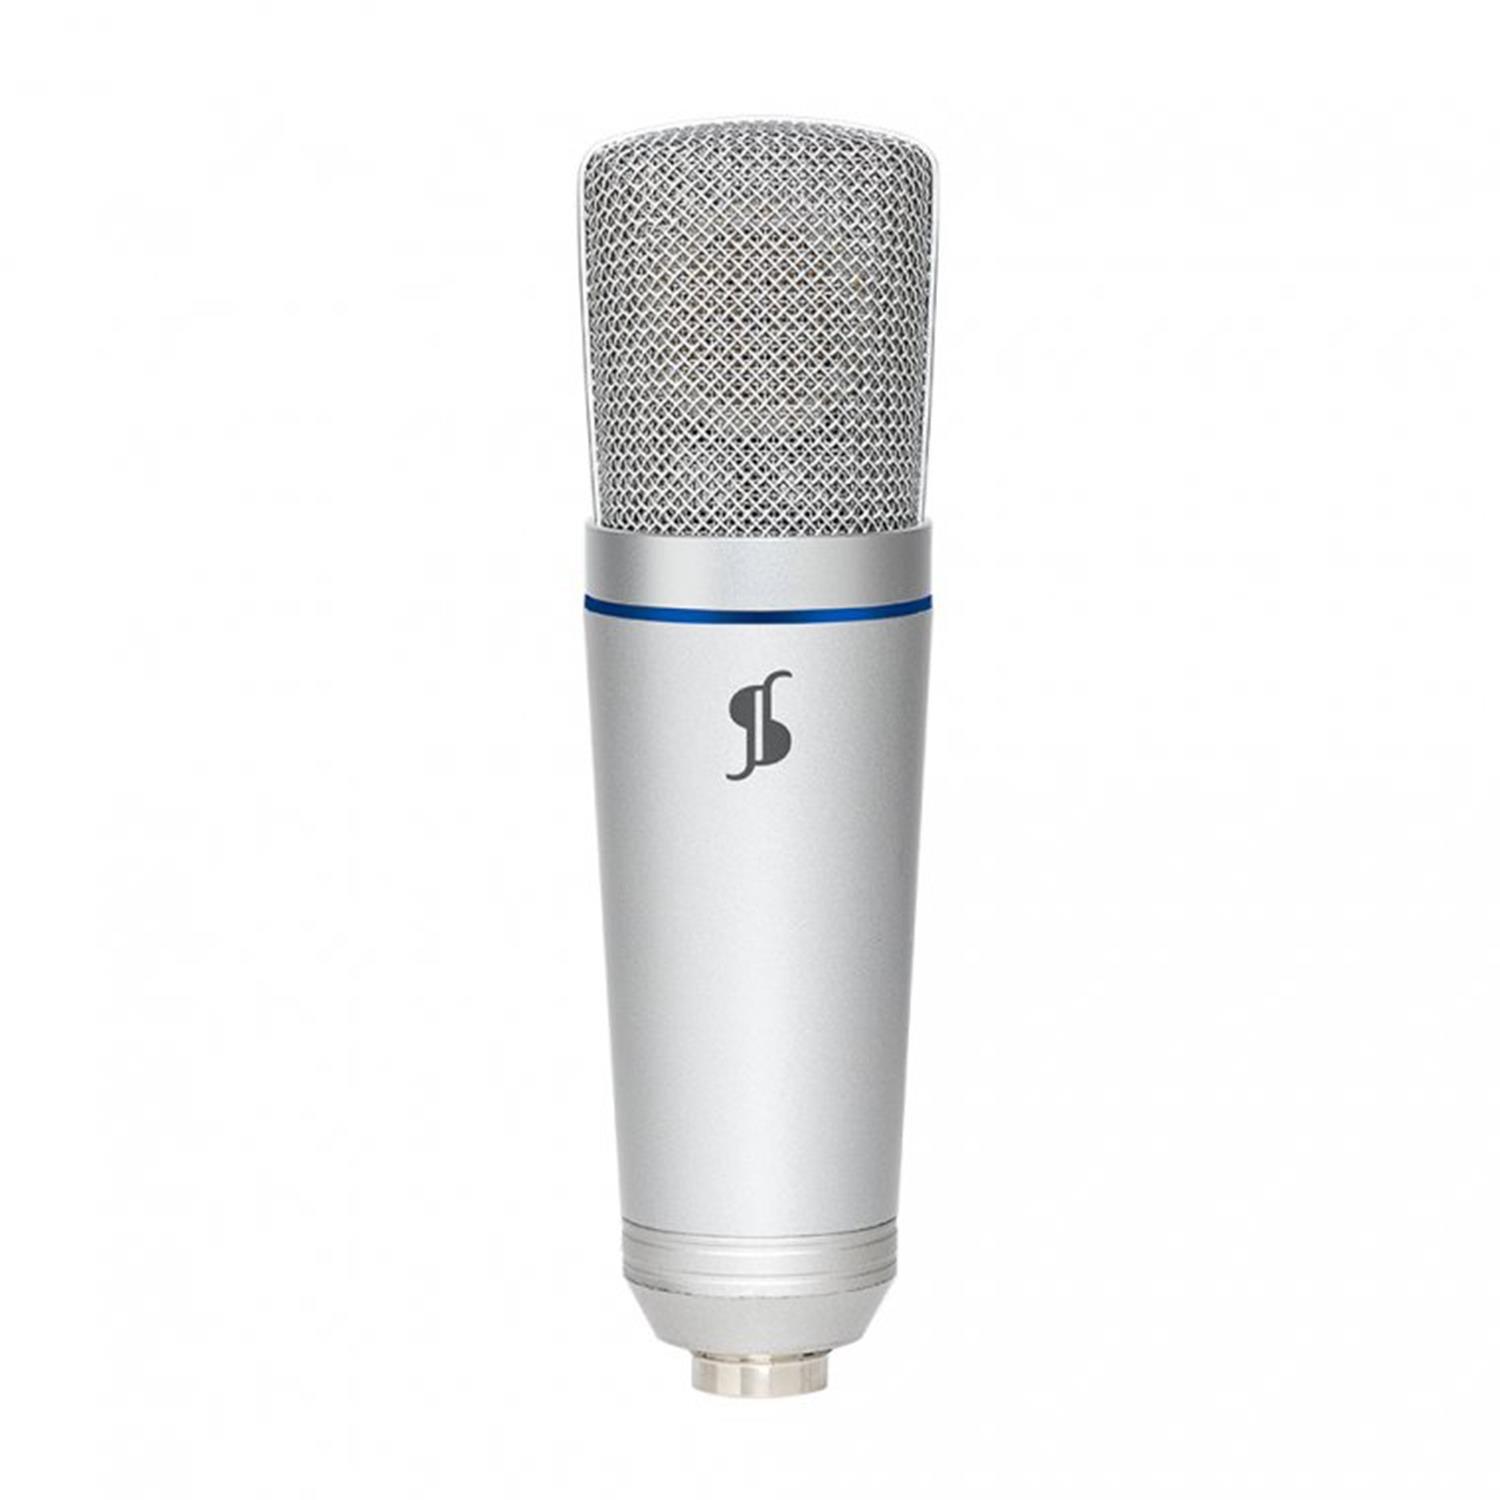 Stagg SUSM50 USB Studio Condenser Microphone - DY Pro Audio